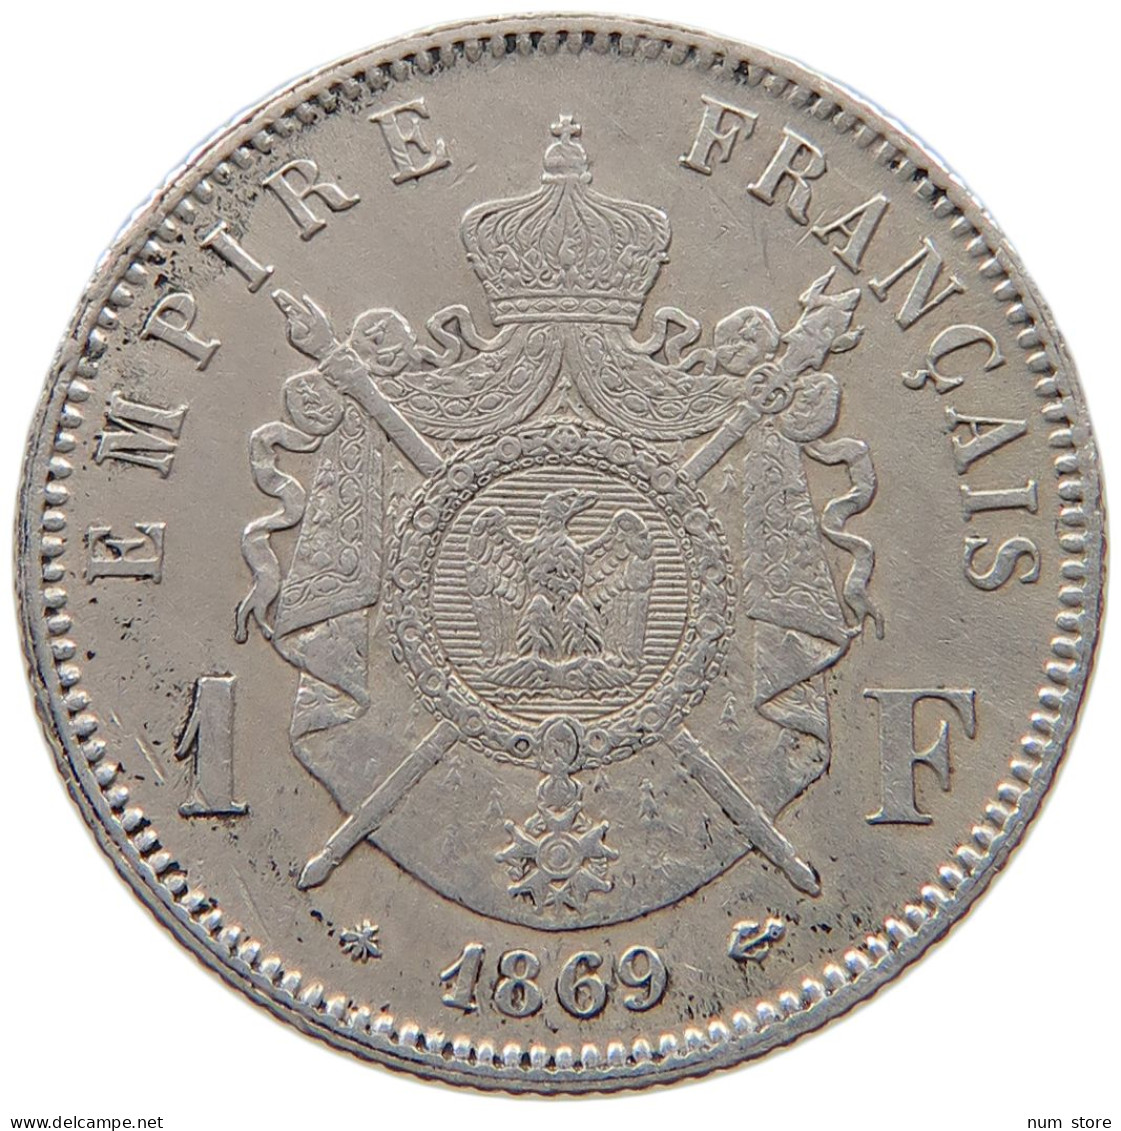 FRANCE FRANC 1869 A NAPOLEON III. (1852-1870) #MA 000056 - 1 Franc